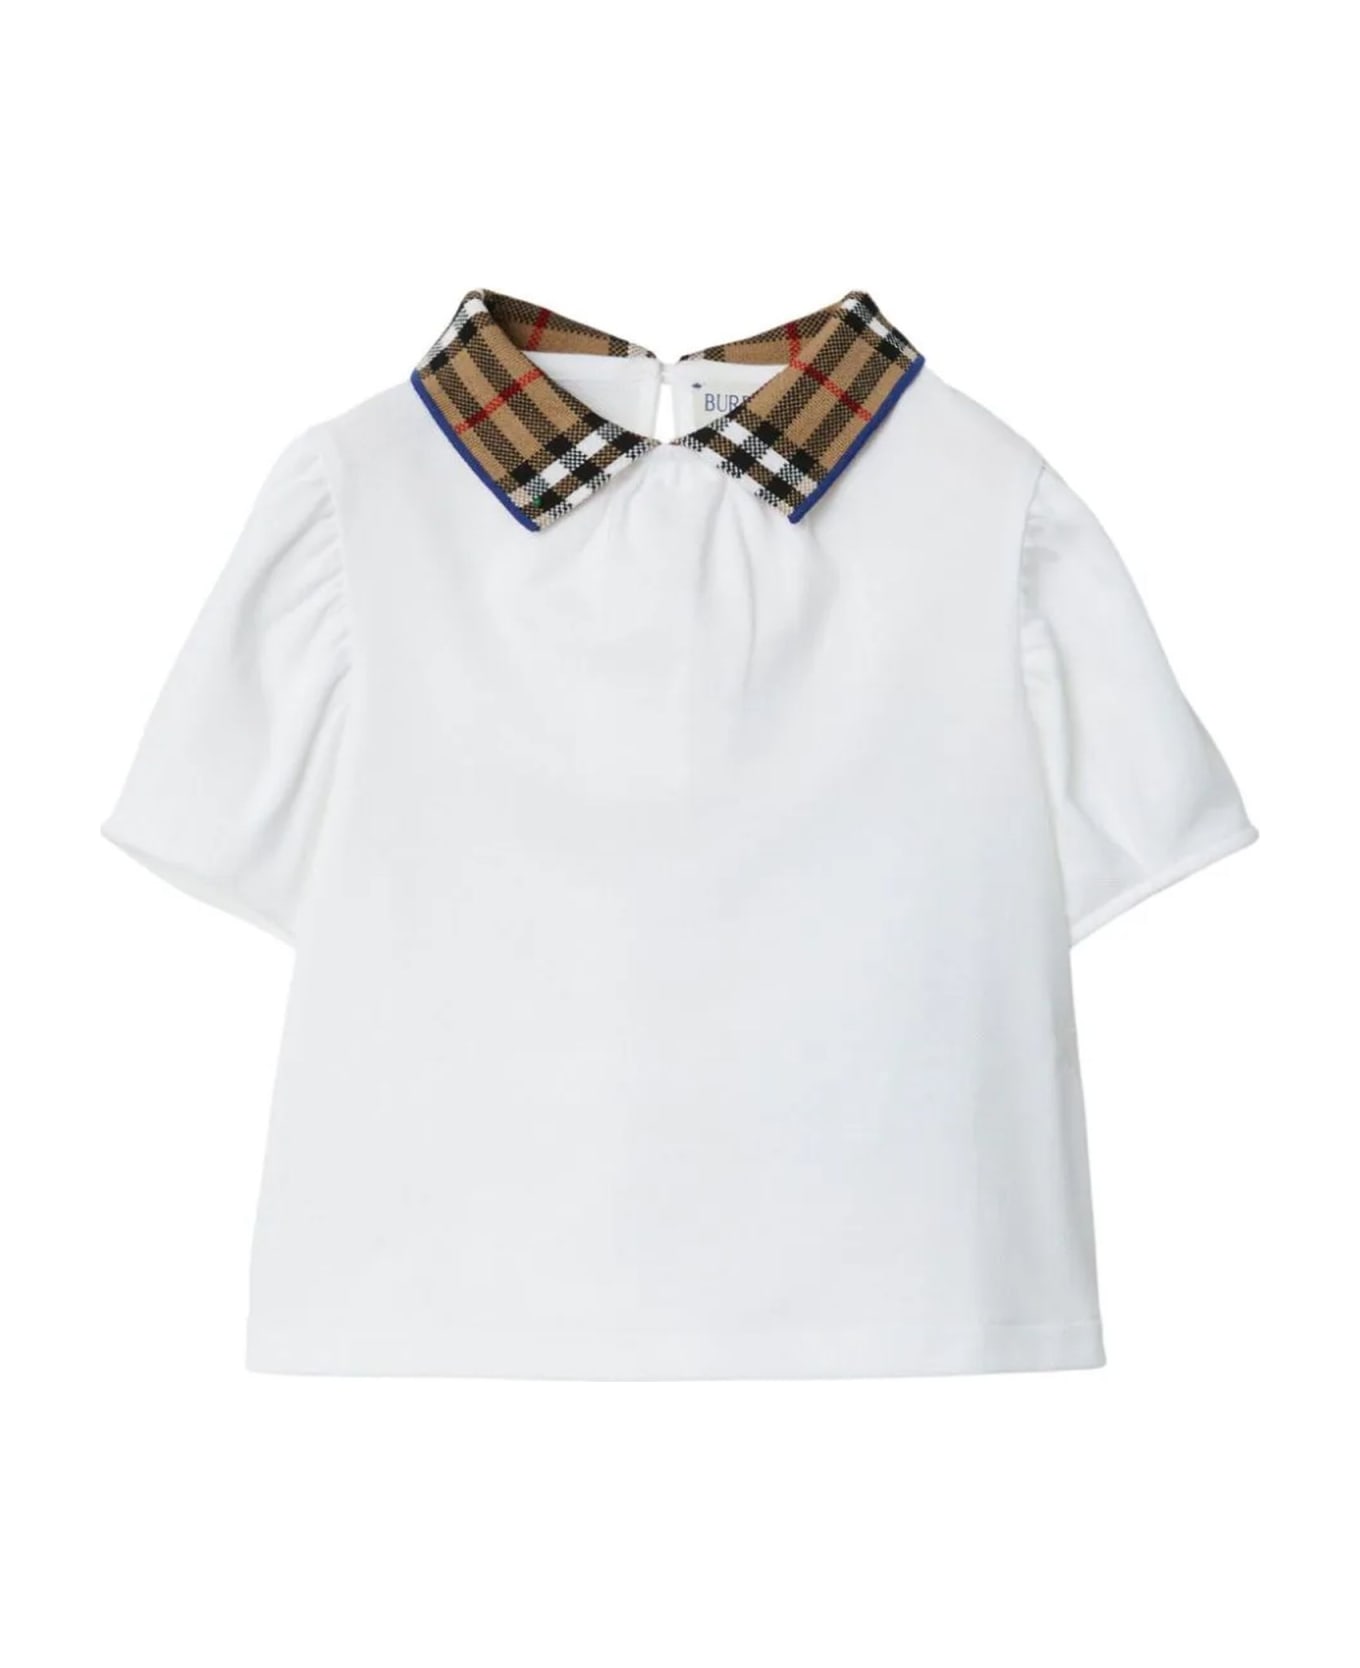 Burberry White Stretch-cotton Polo Shirt - White